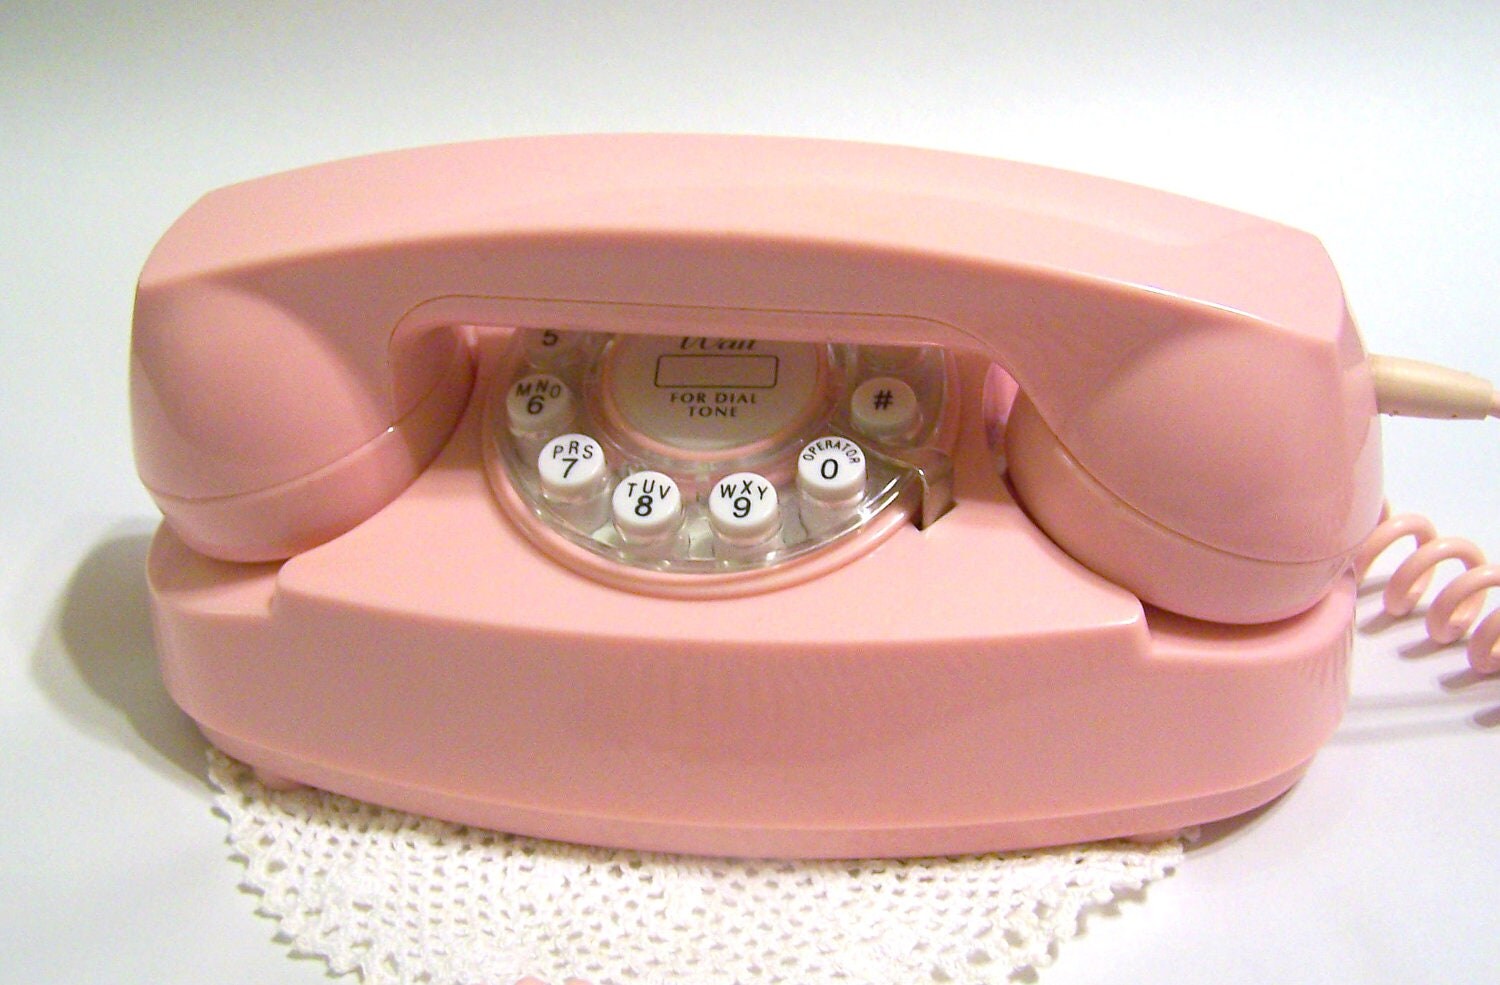 Pink Princess Phone